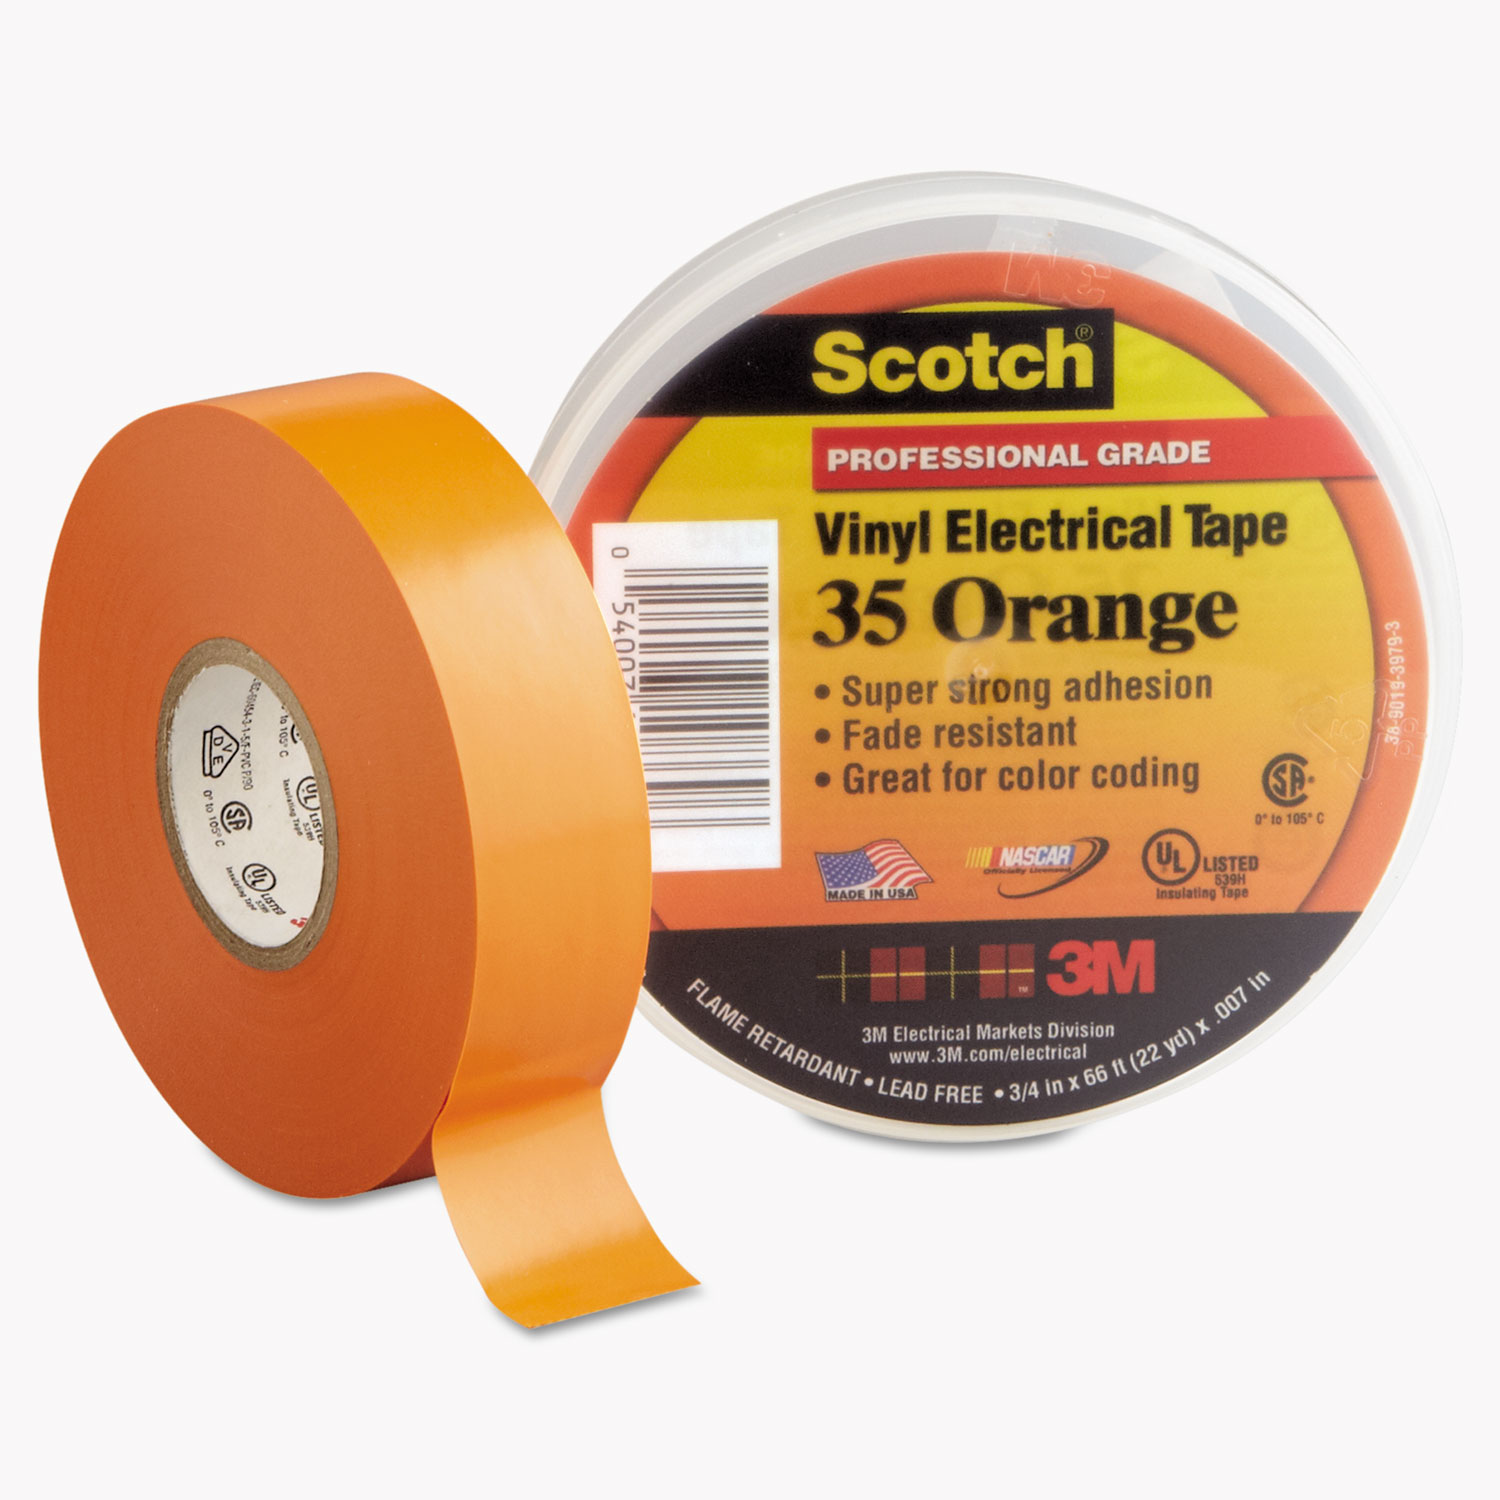  3M 500-10869 Scotch 35 Vinyl Electrical Color Coding Tape, 3 Core, 0.75 x 66 ft, Orange (MMM10869) 